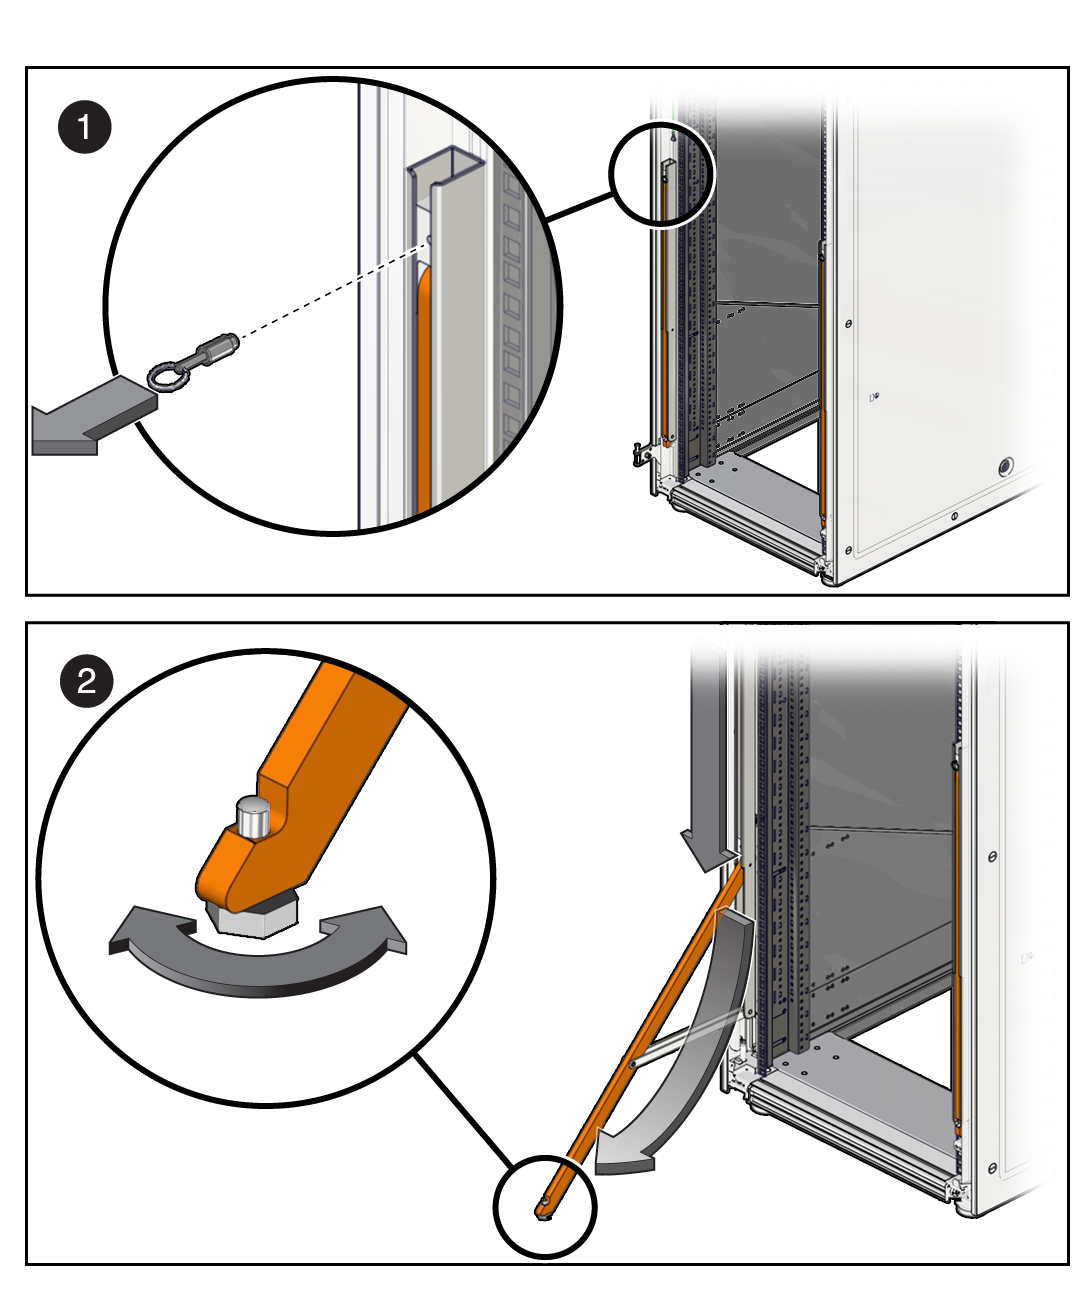 image:転倒防止脚を配備する方法を示す図。